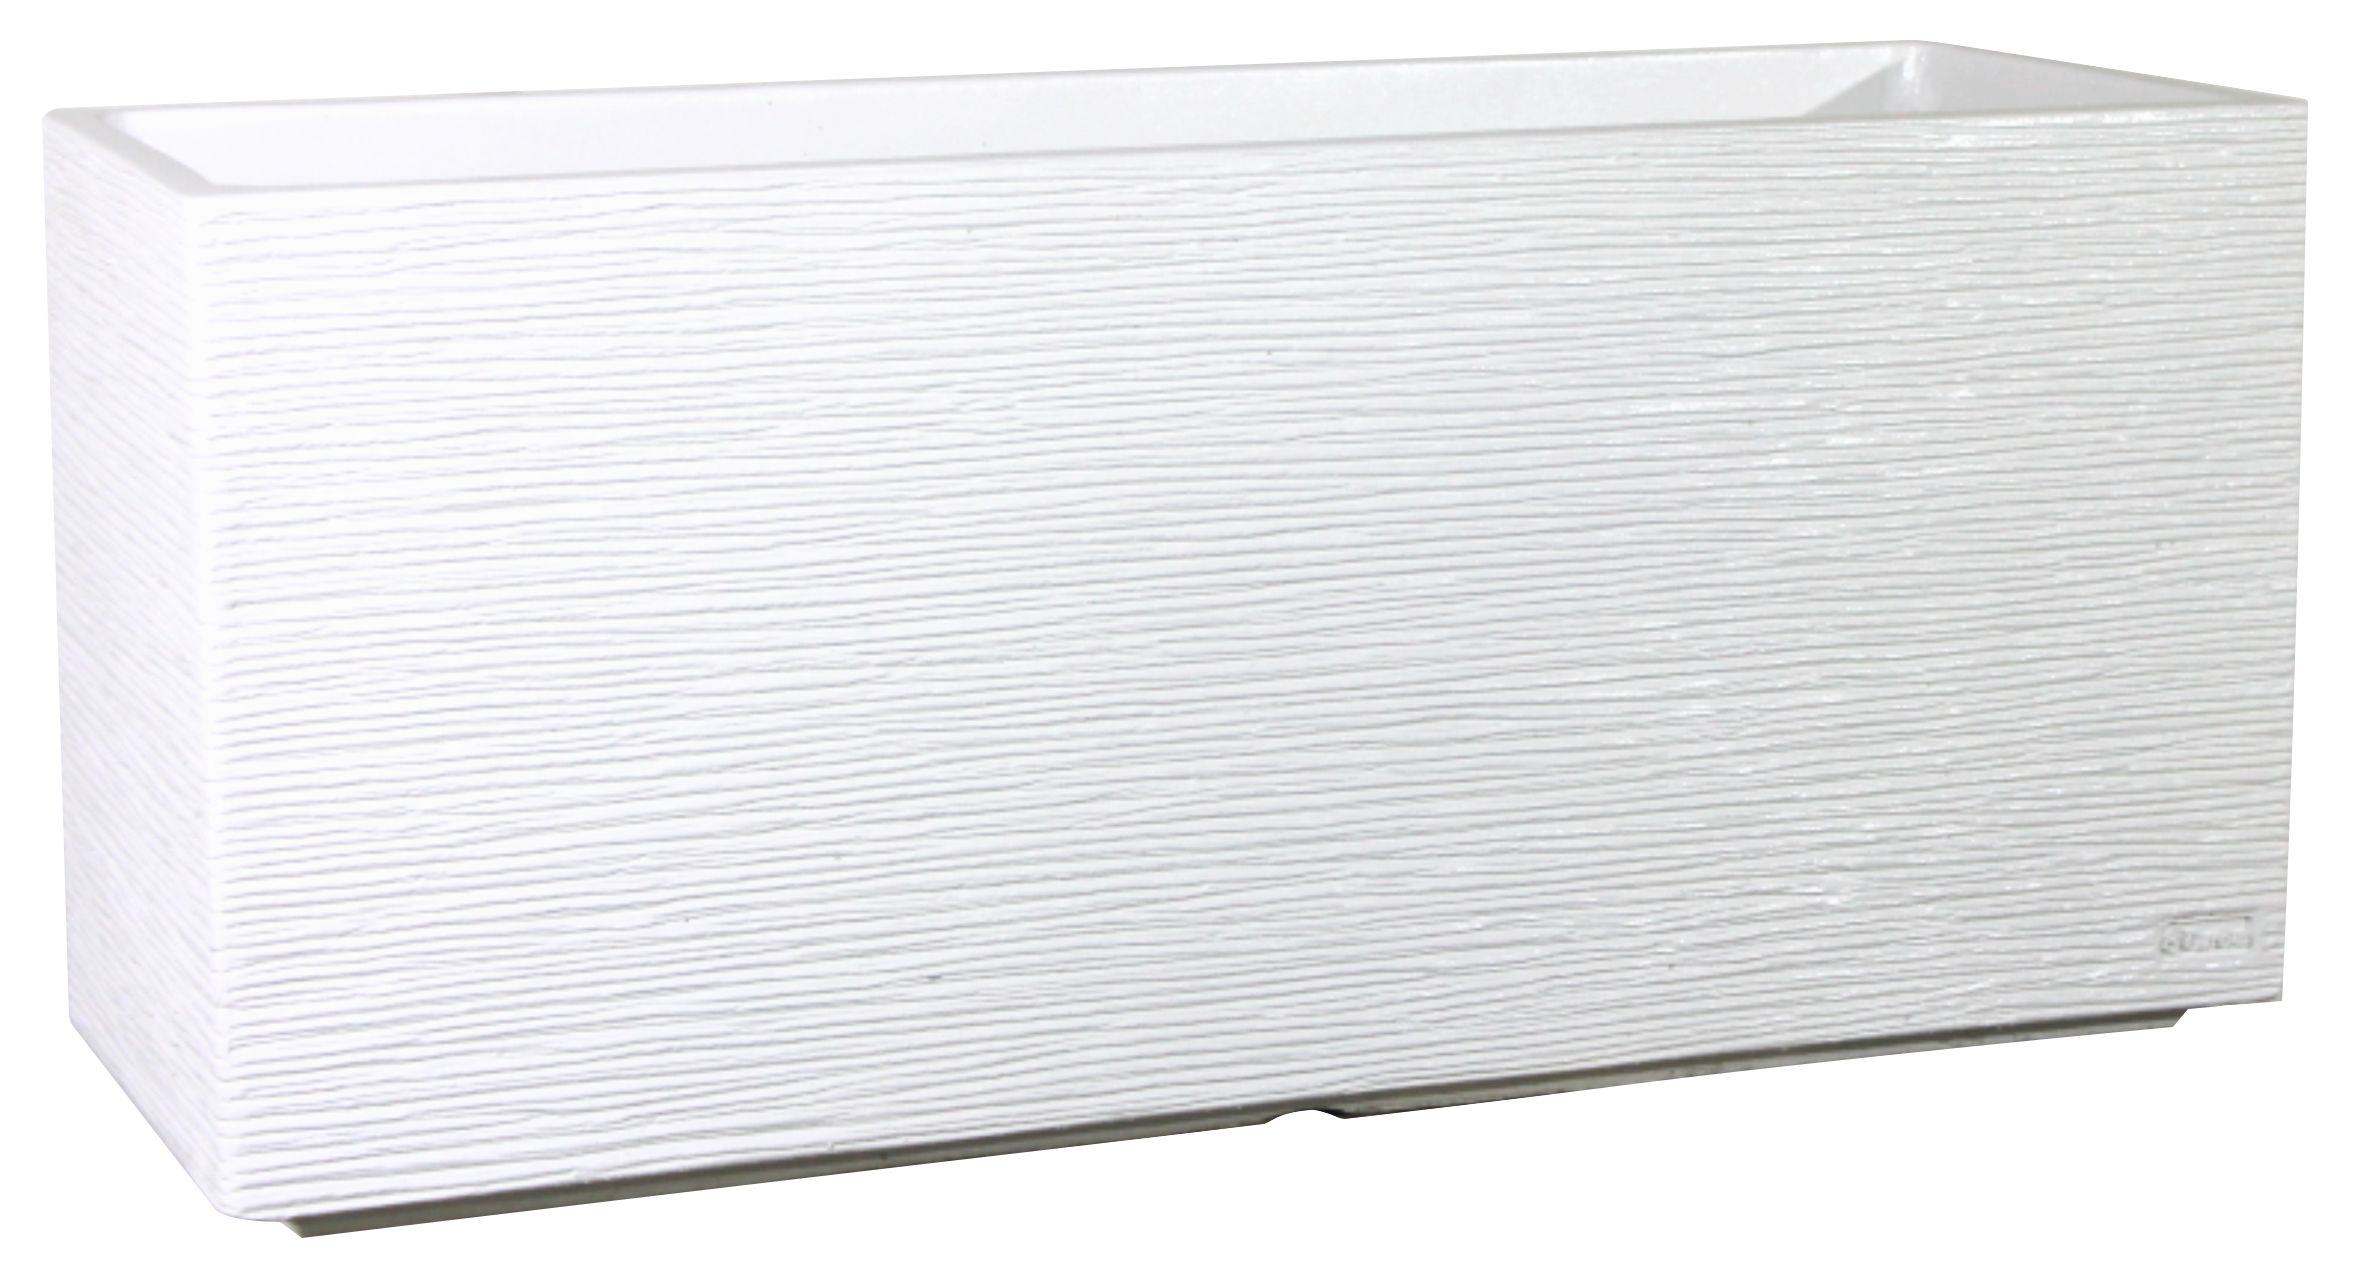 Jardinera valencia serie hispana blanco 95x37 cm